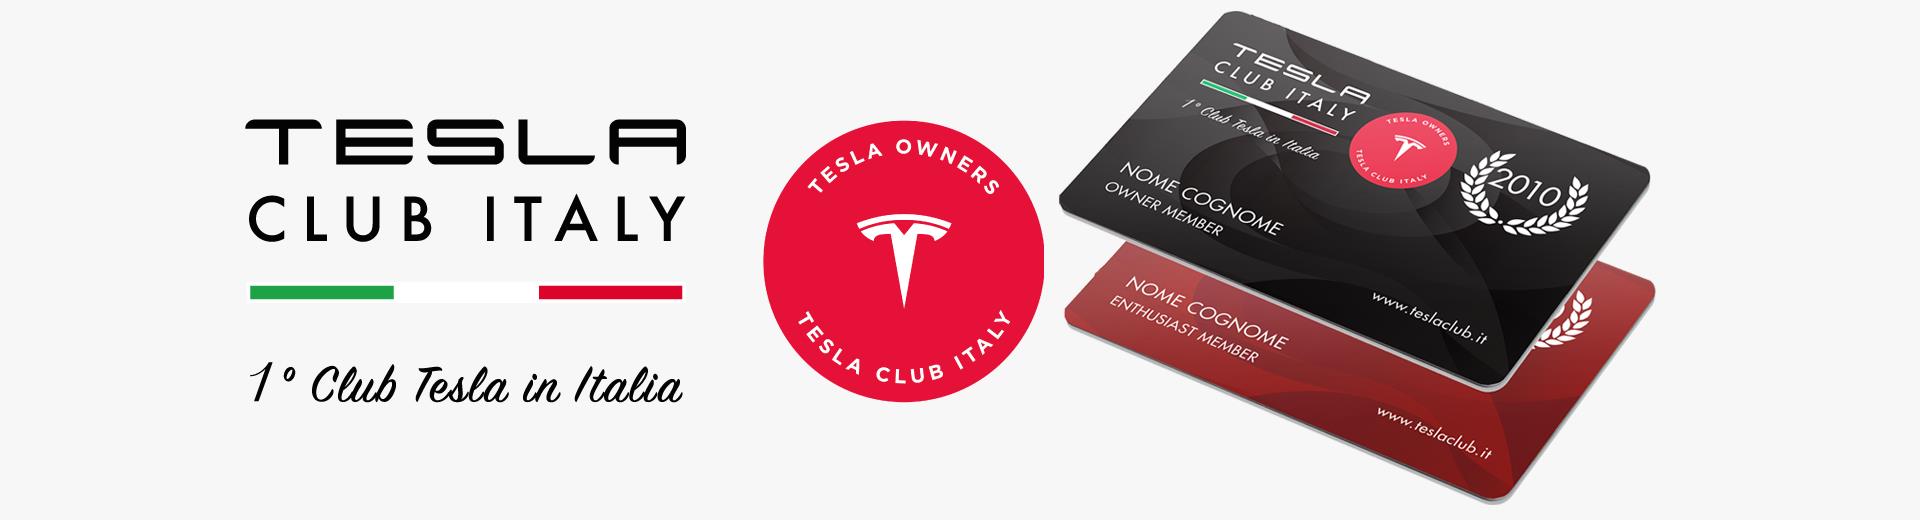 Tesla Club Italy